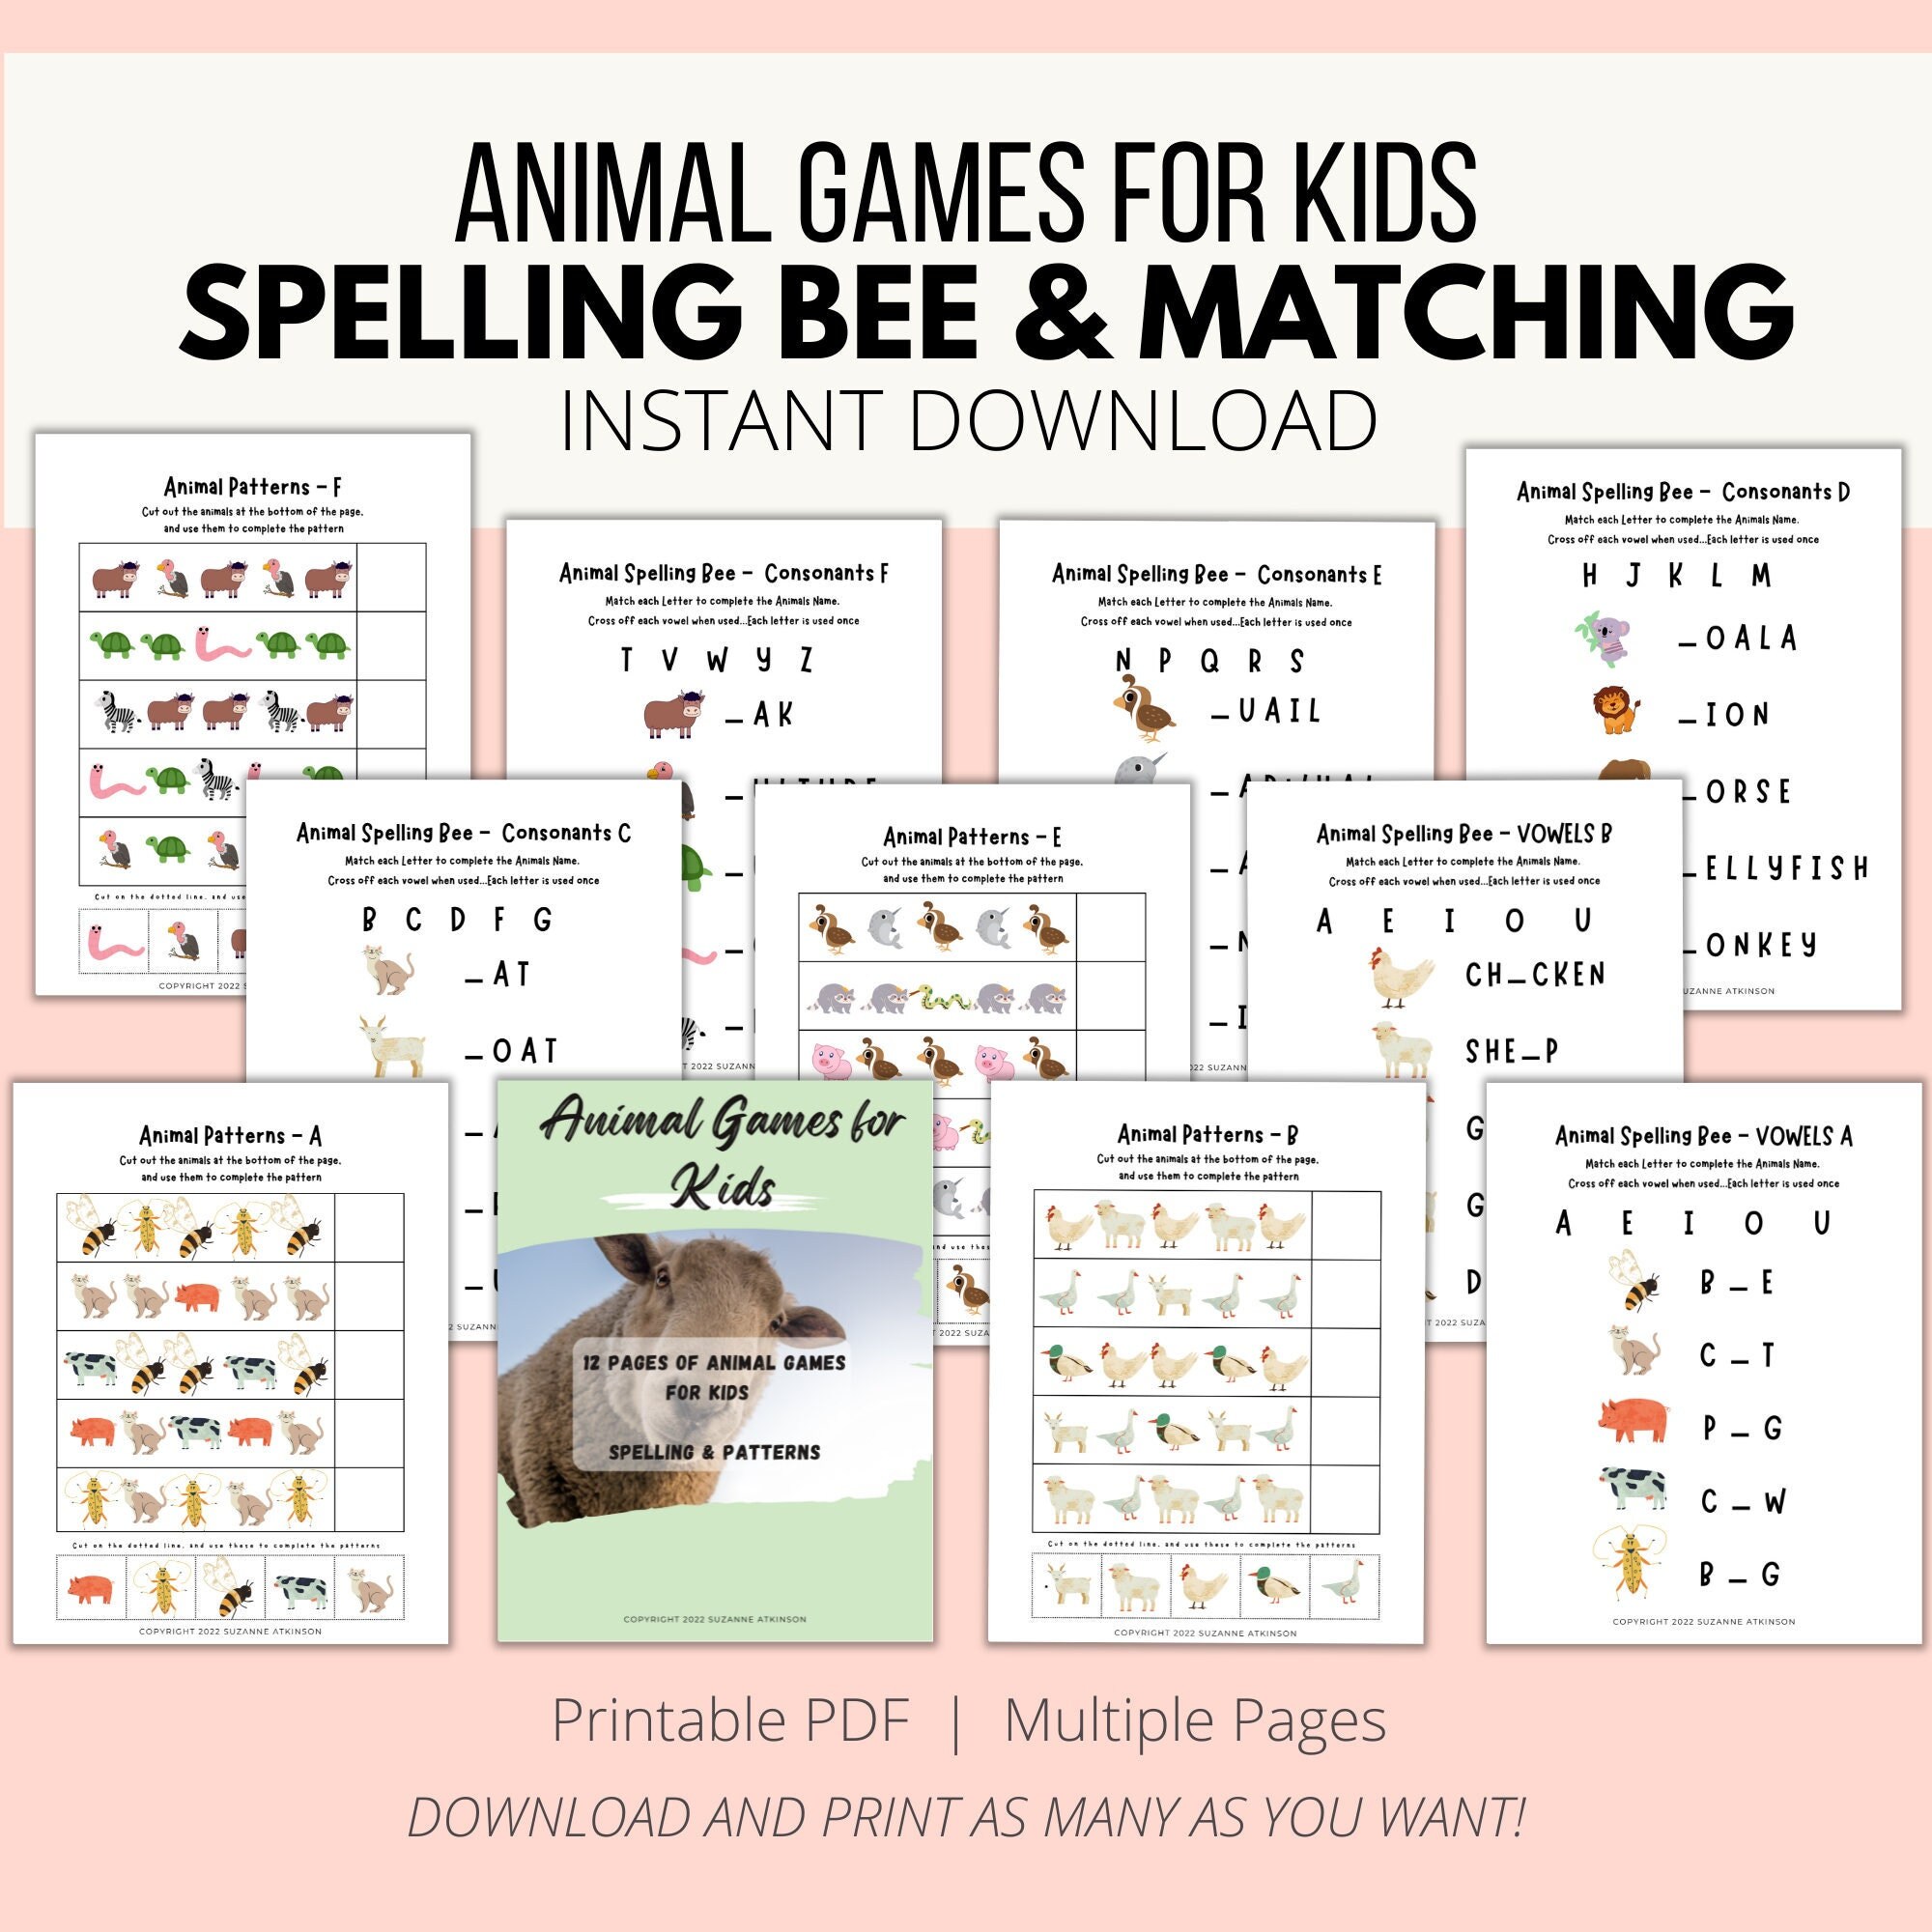 Regarding replica Feel bad Animal Spelling Games Animal Matching Games for Kids Animal - Etsy